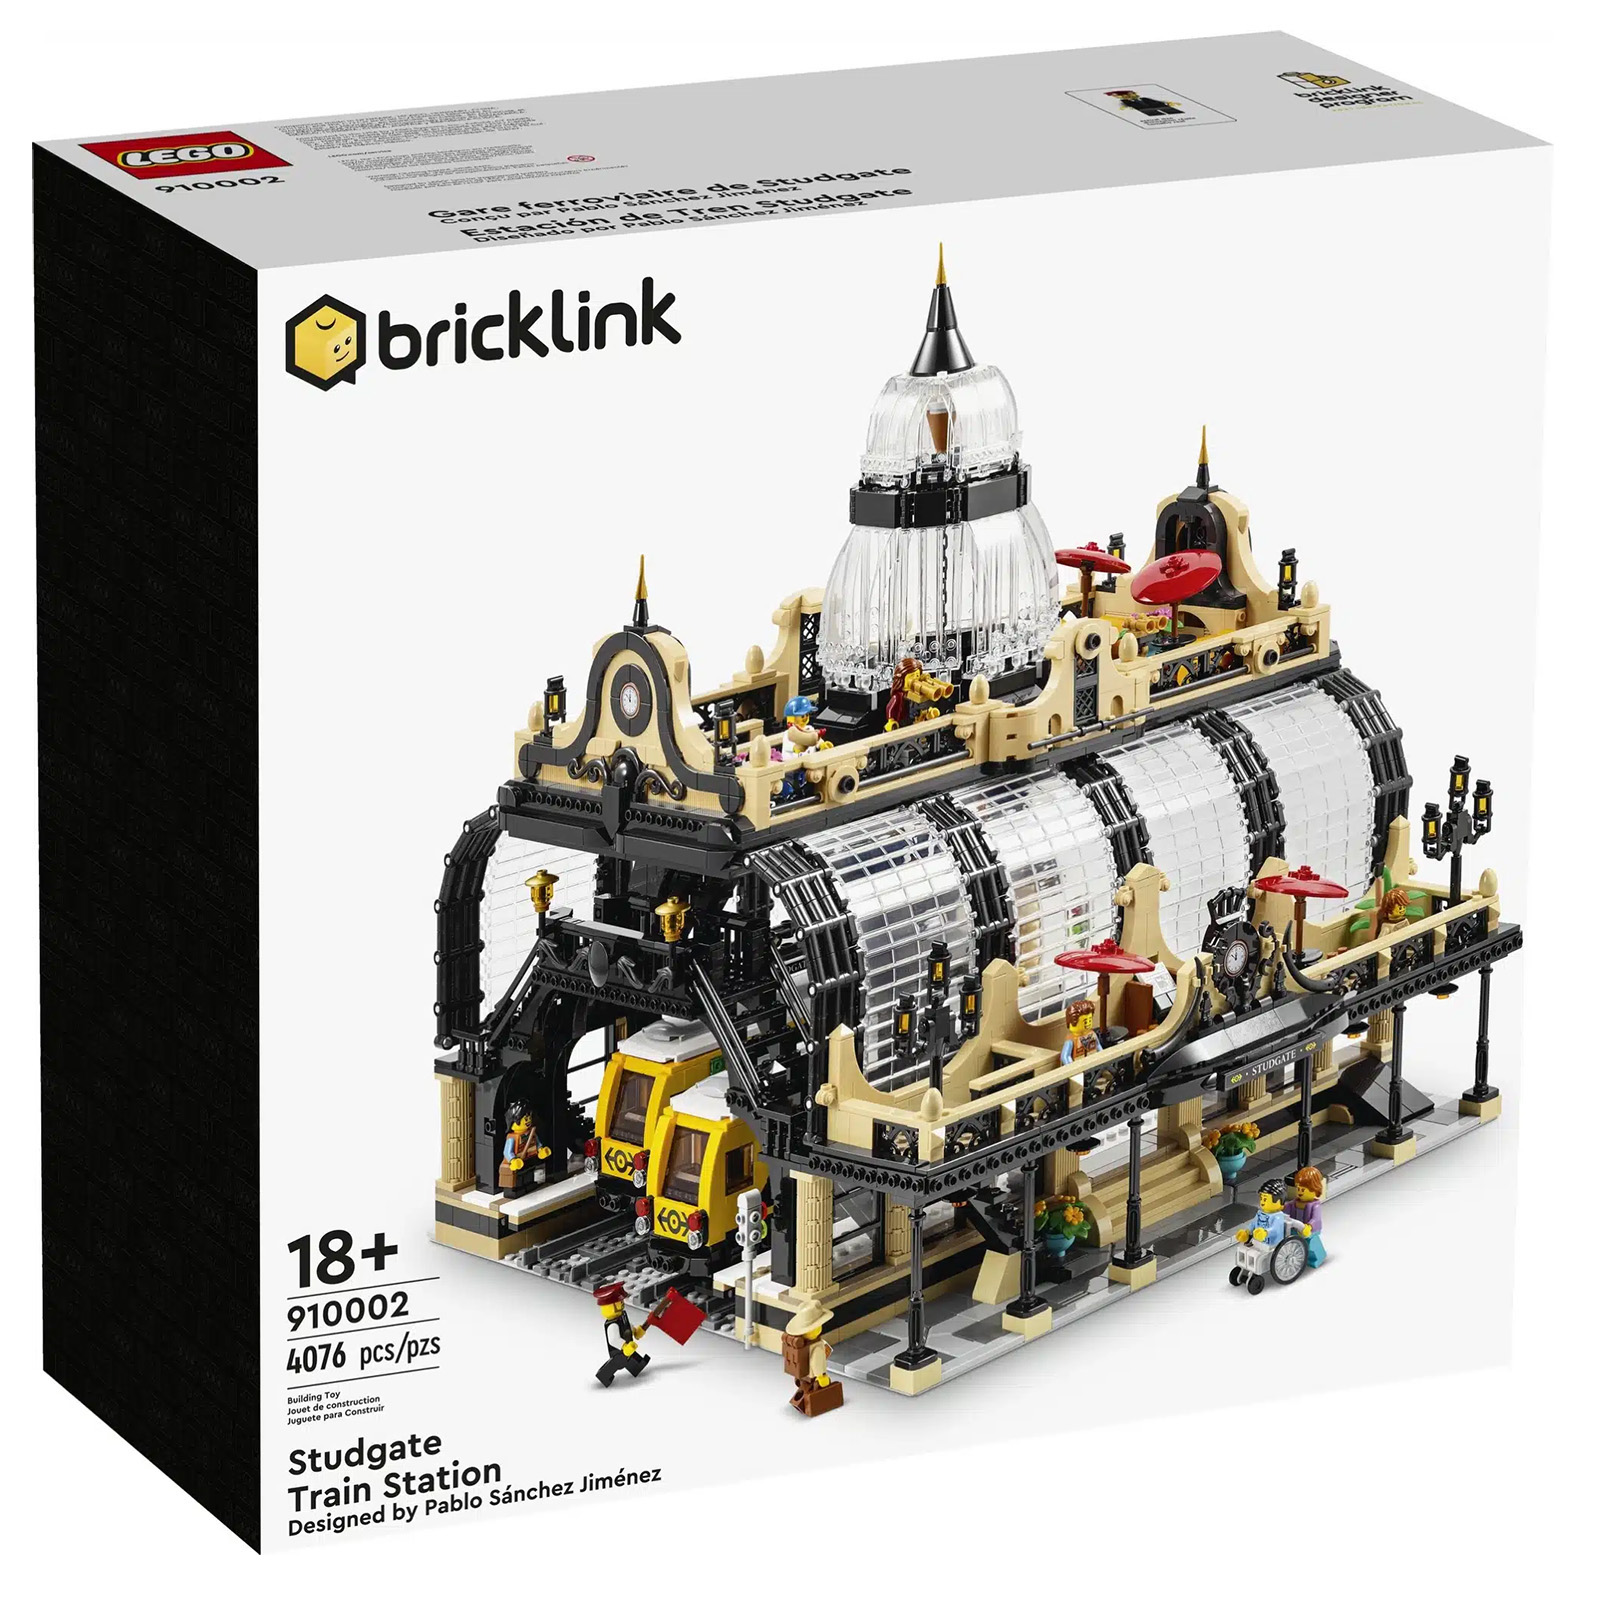 LEGO BrickLink Designer Program Round Box Art Images Revealed - The Brick Fan